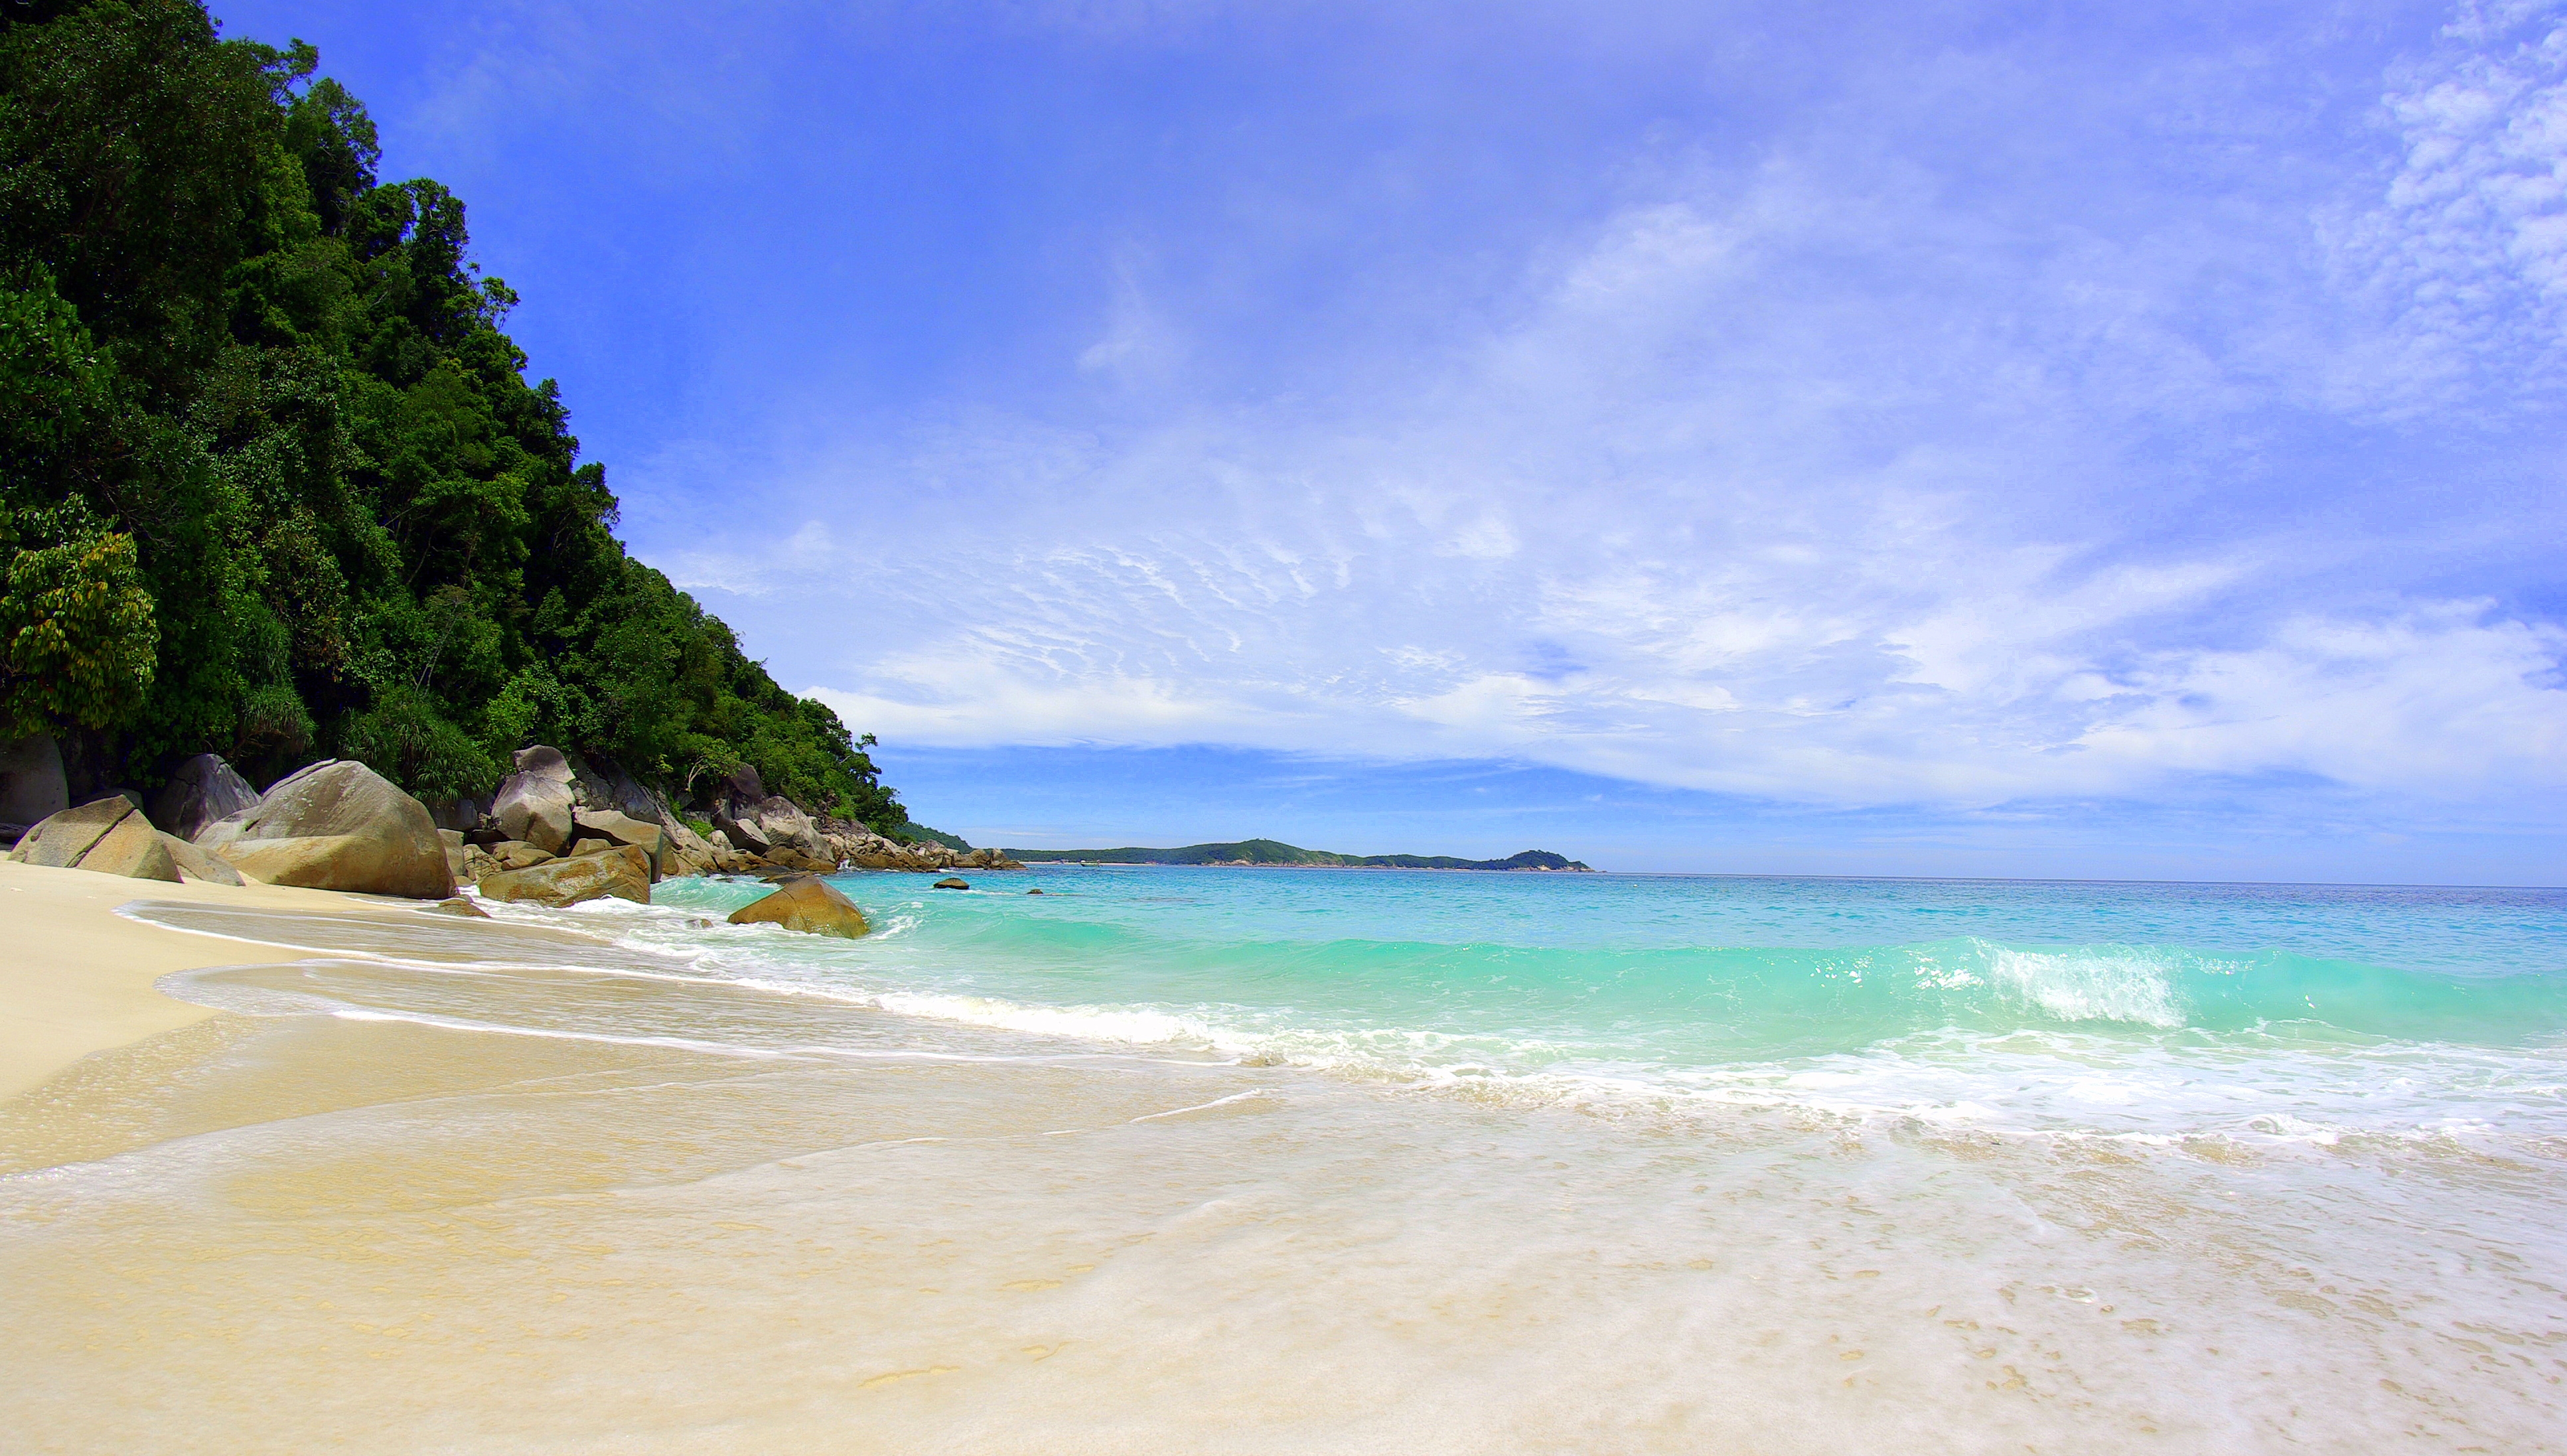 Descarga gratis la imagen Naturaleza, Mar, Zona Tropical, Trópico, Playa en el escritorio de tu PC